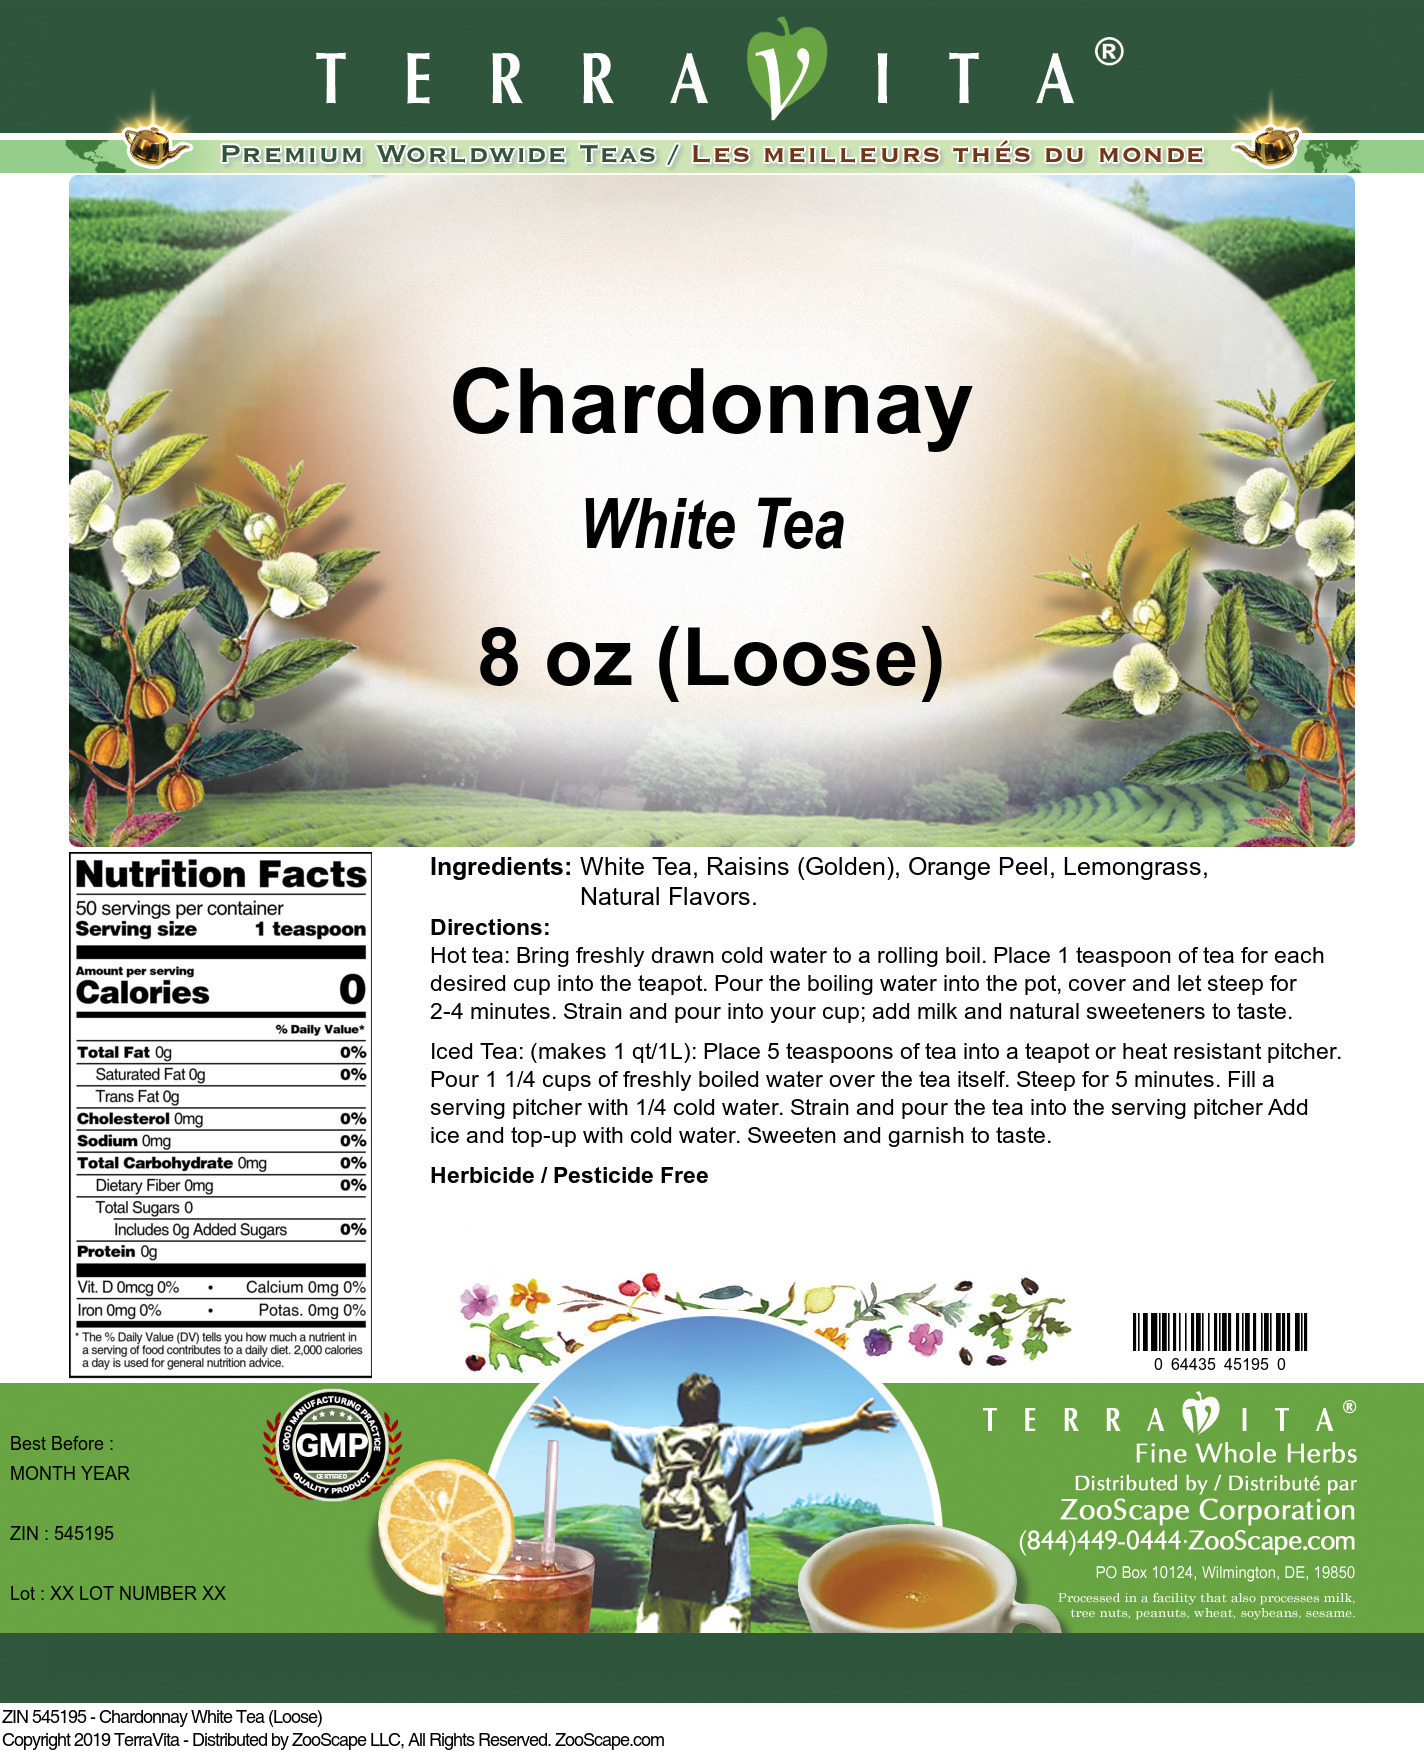 Chardonnay White Tea (Loose) - Label